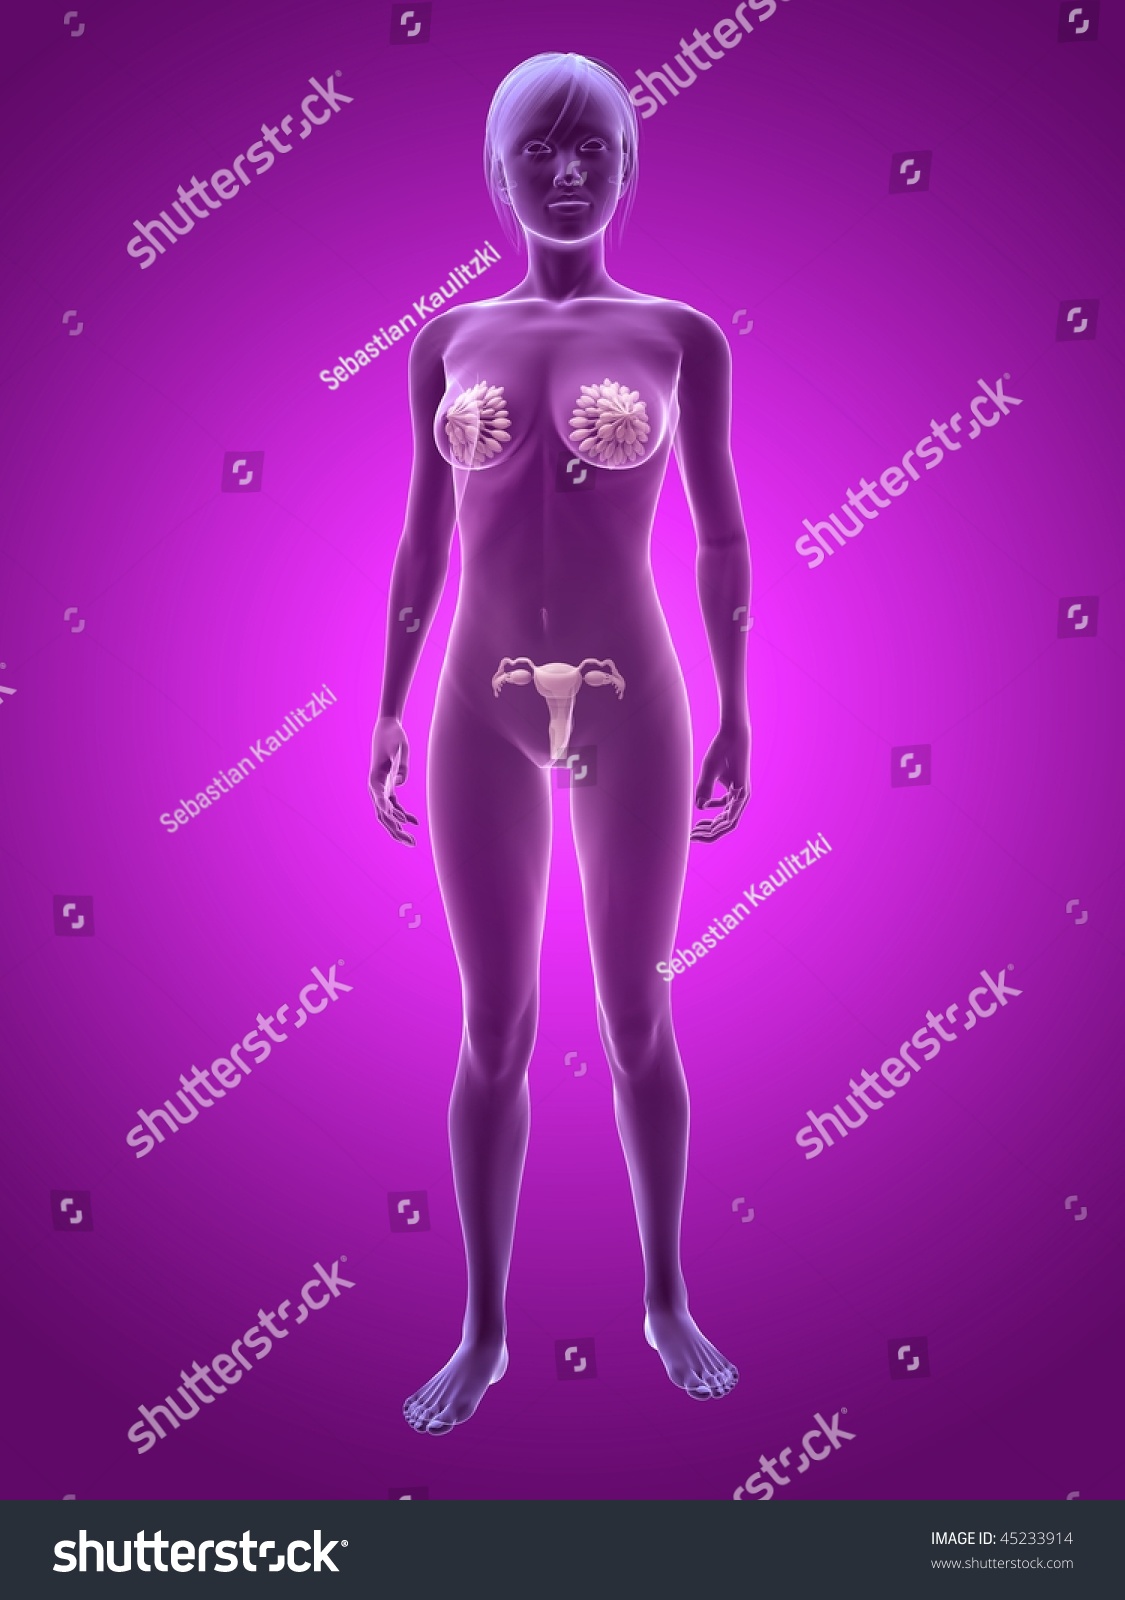 Female Sex Organs Images 15